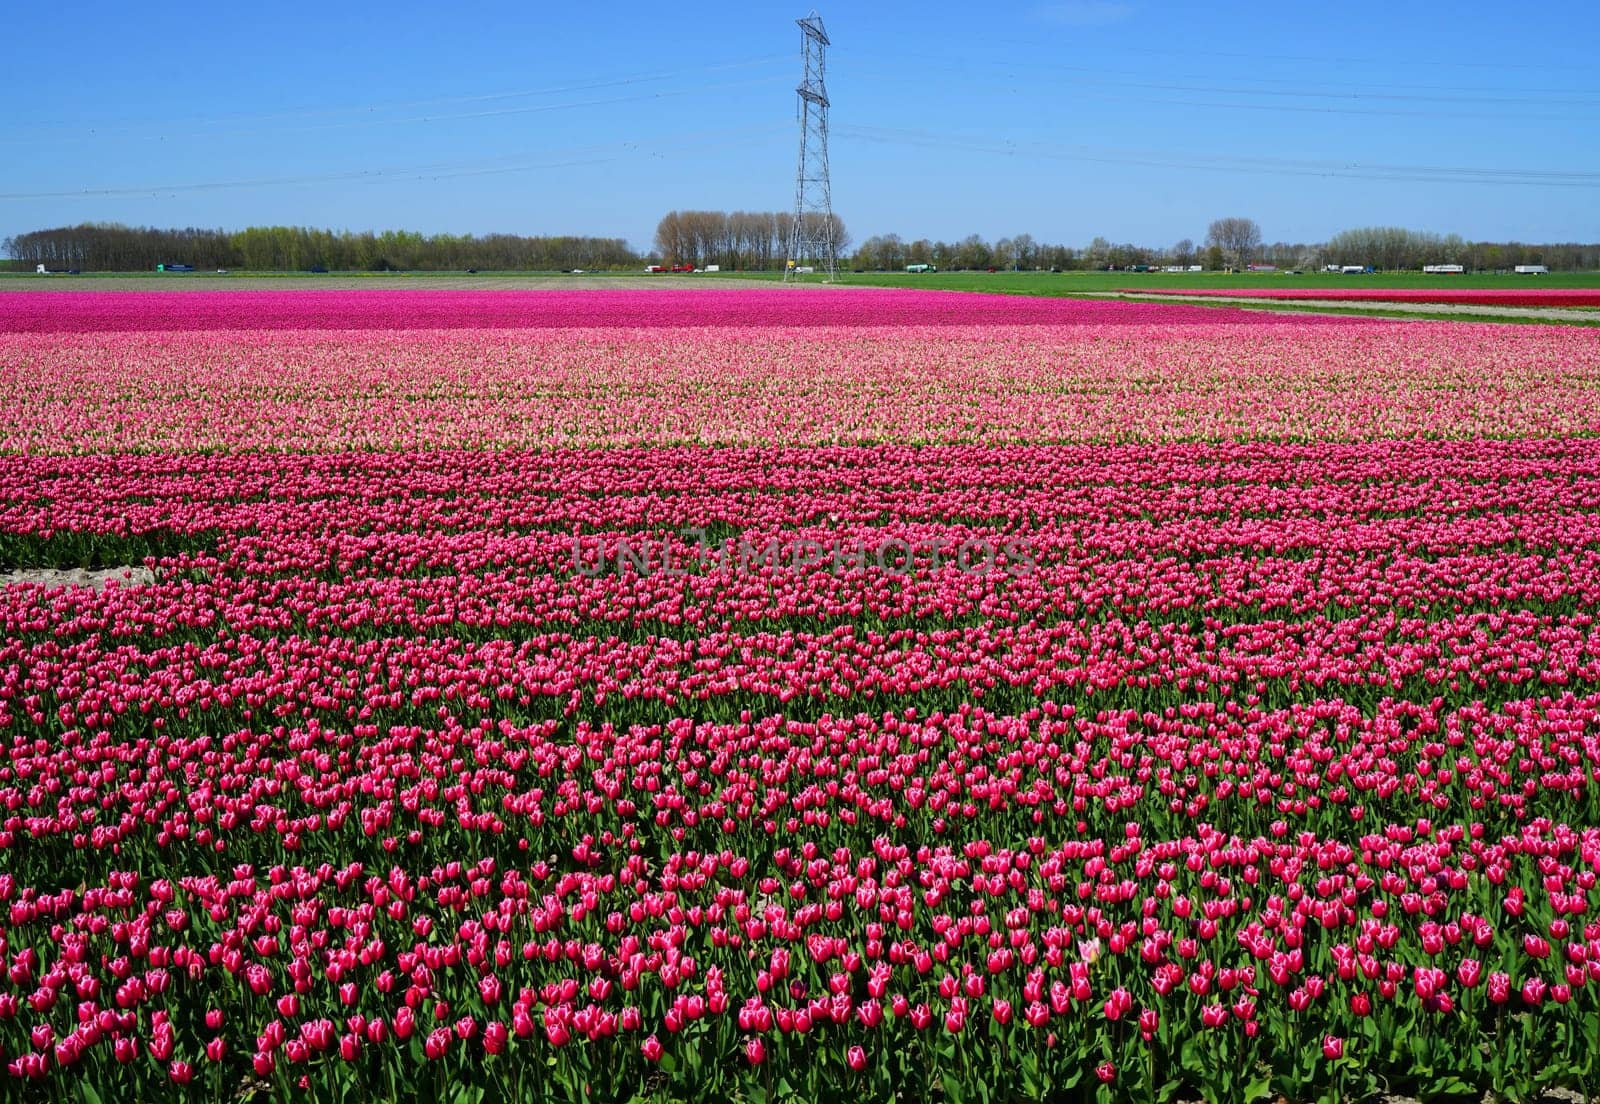 Pink Tulip Field in the Netherlands by WielandTeixeira